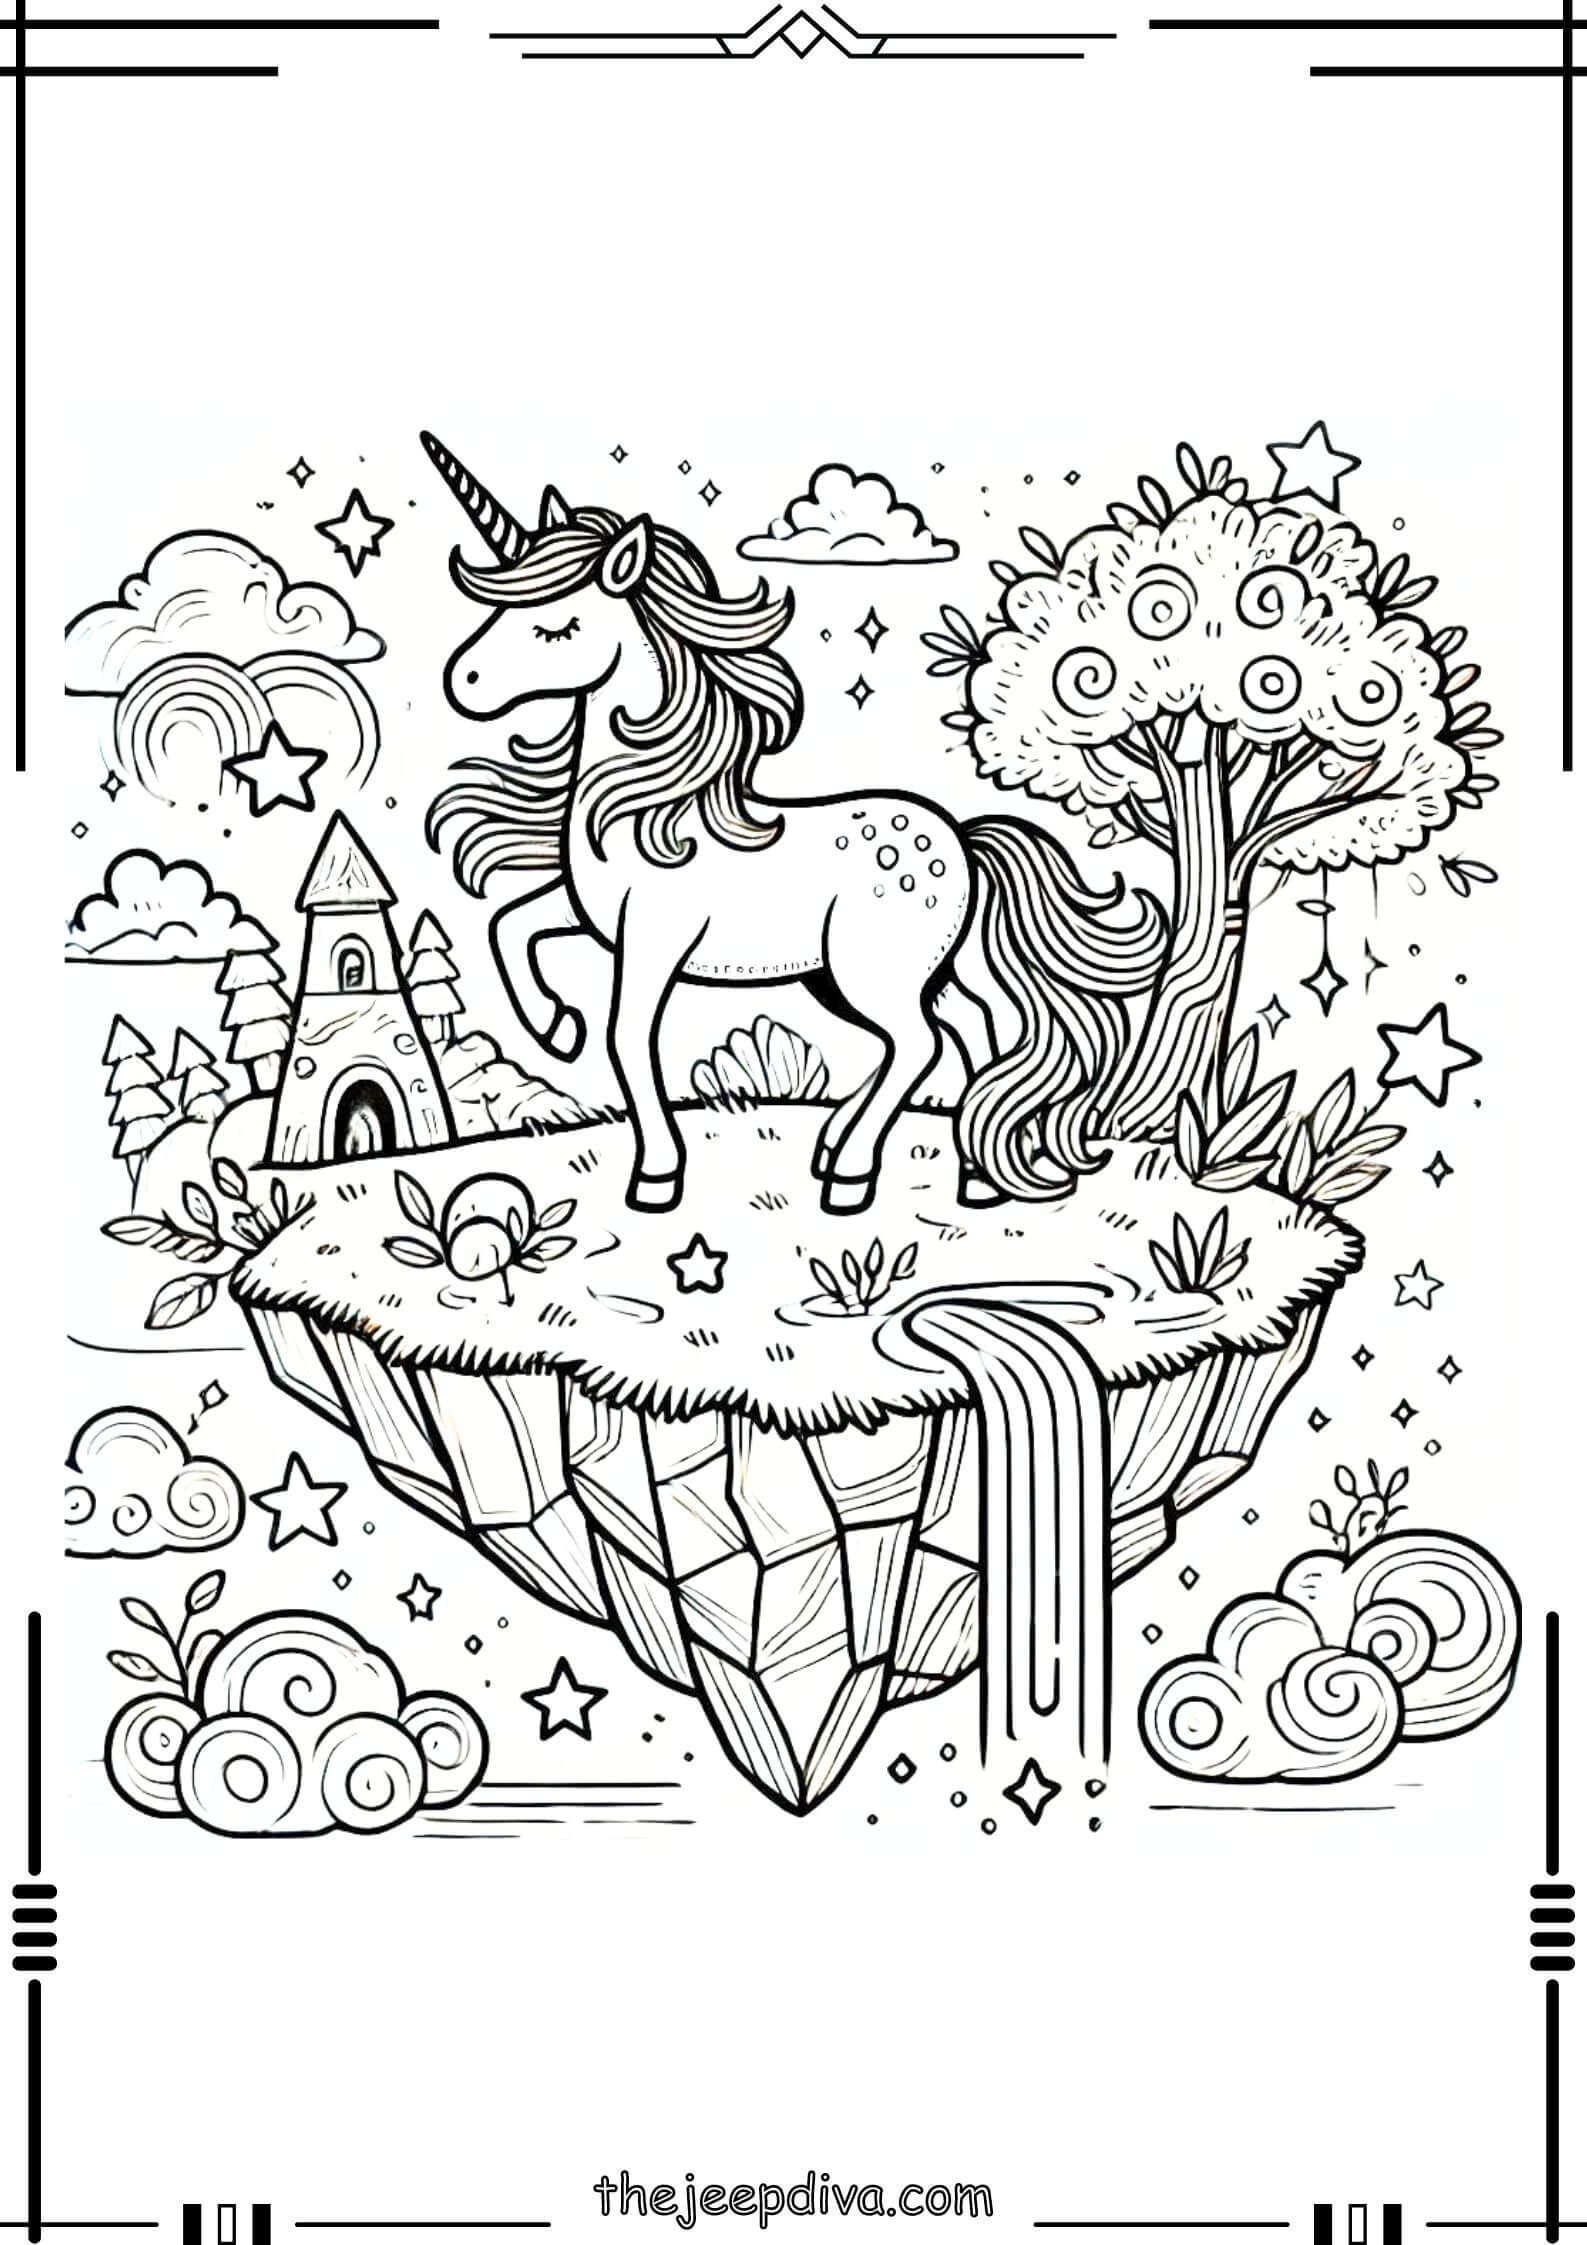 unicorn-coloring-page-hard-24